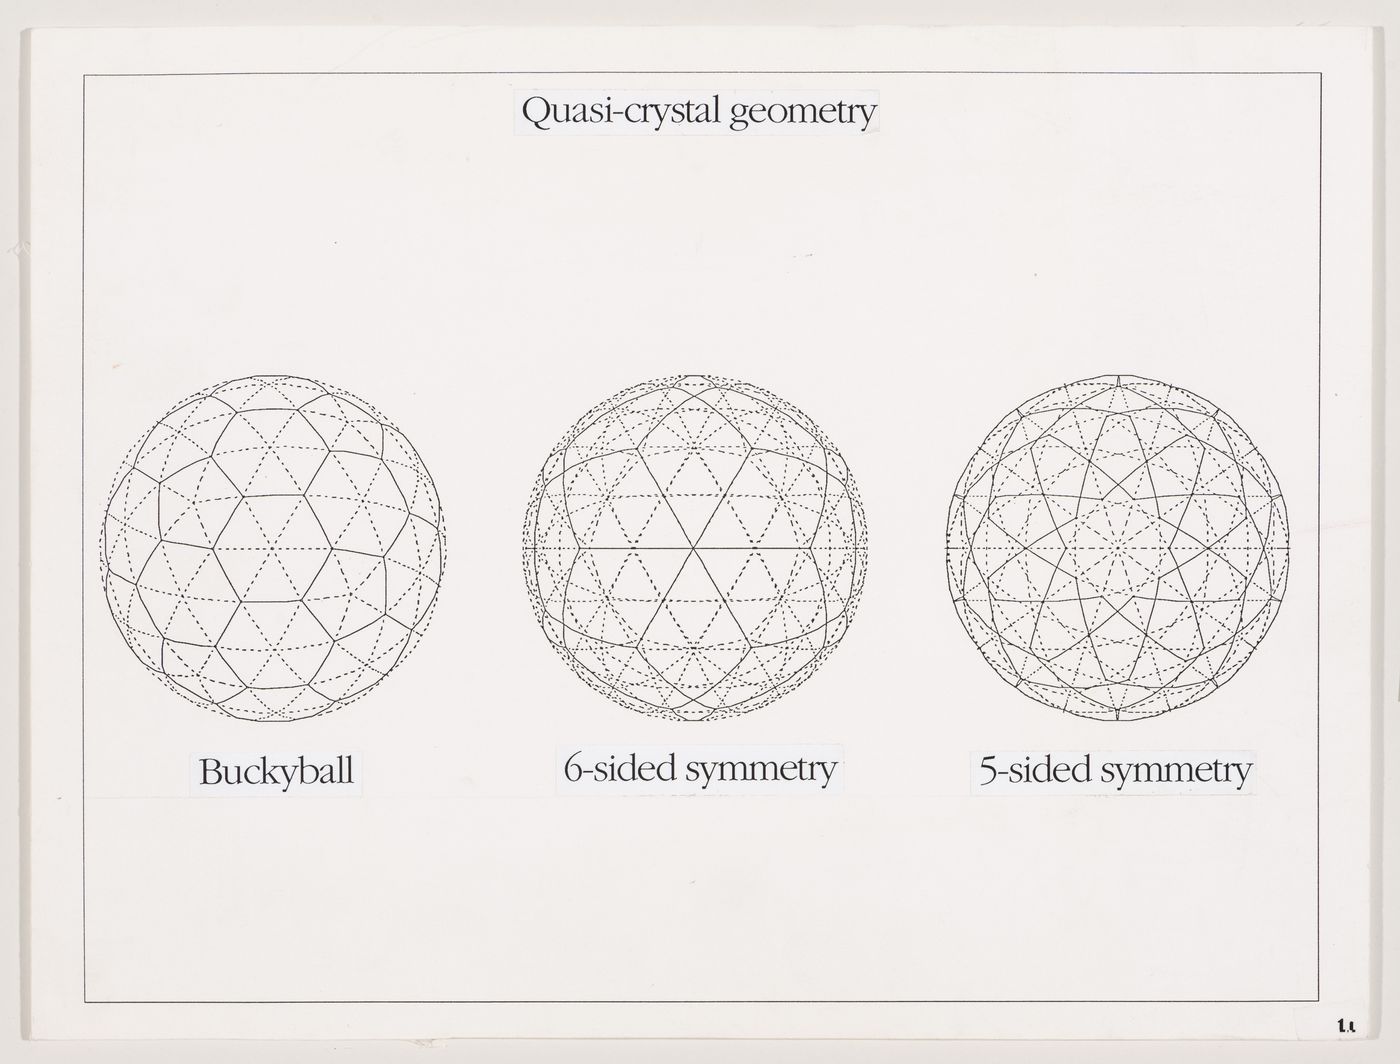 Quasi-crystal geometry